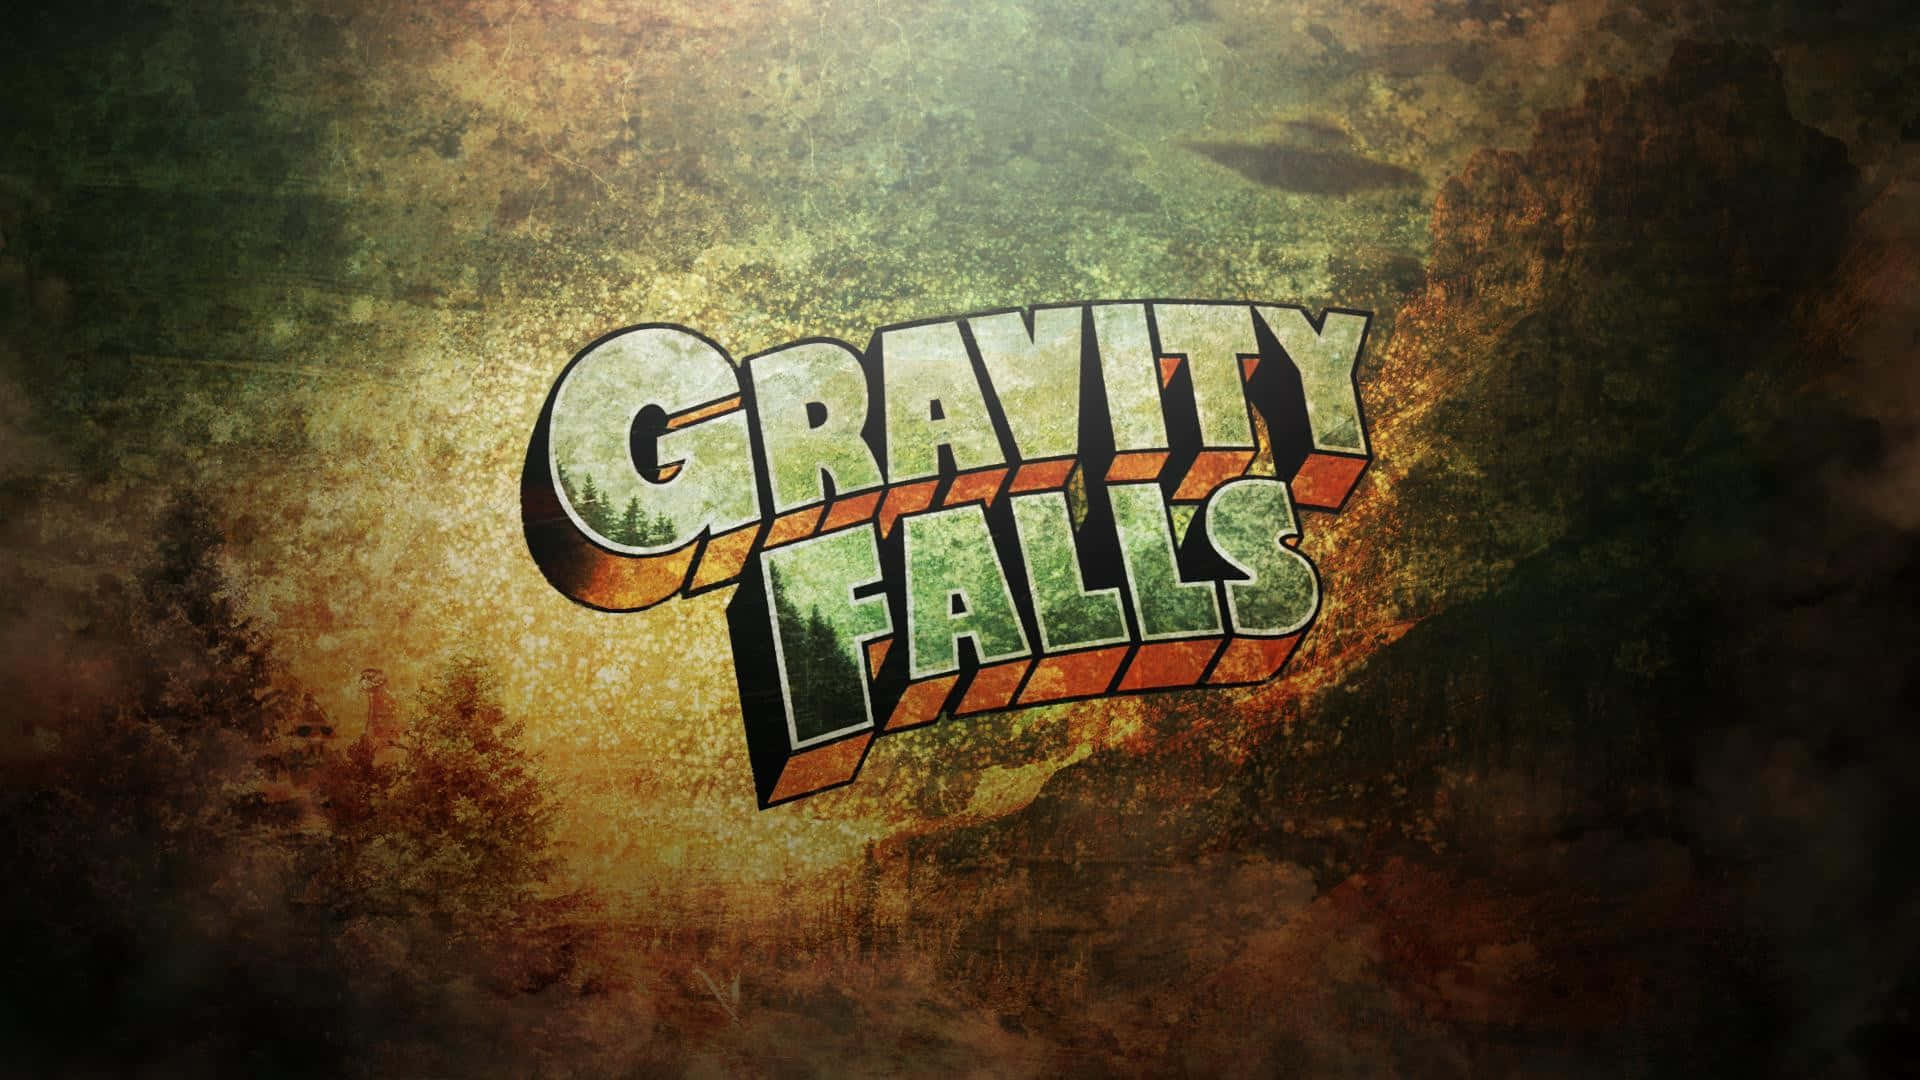 Enjoying the mystery of Gravity Falls